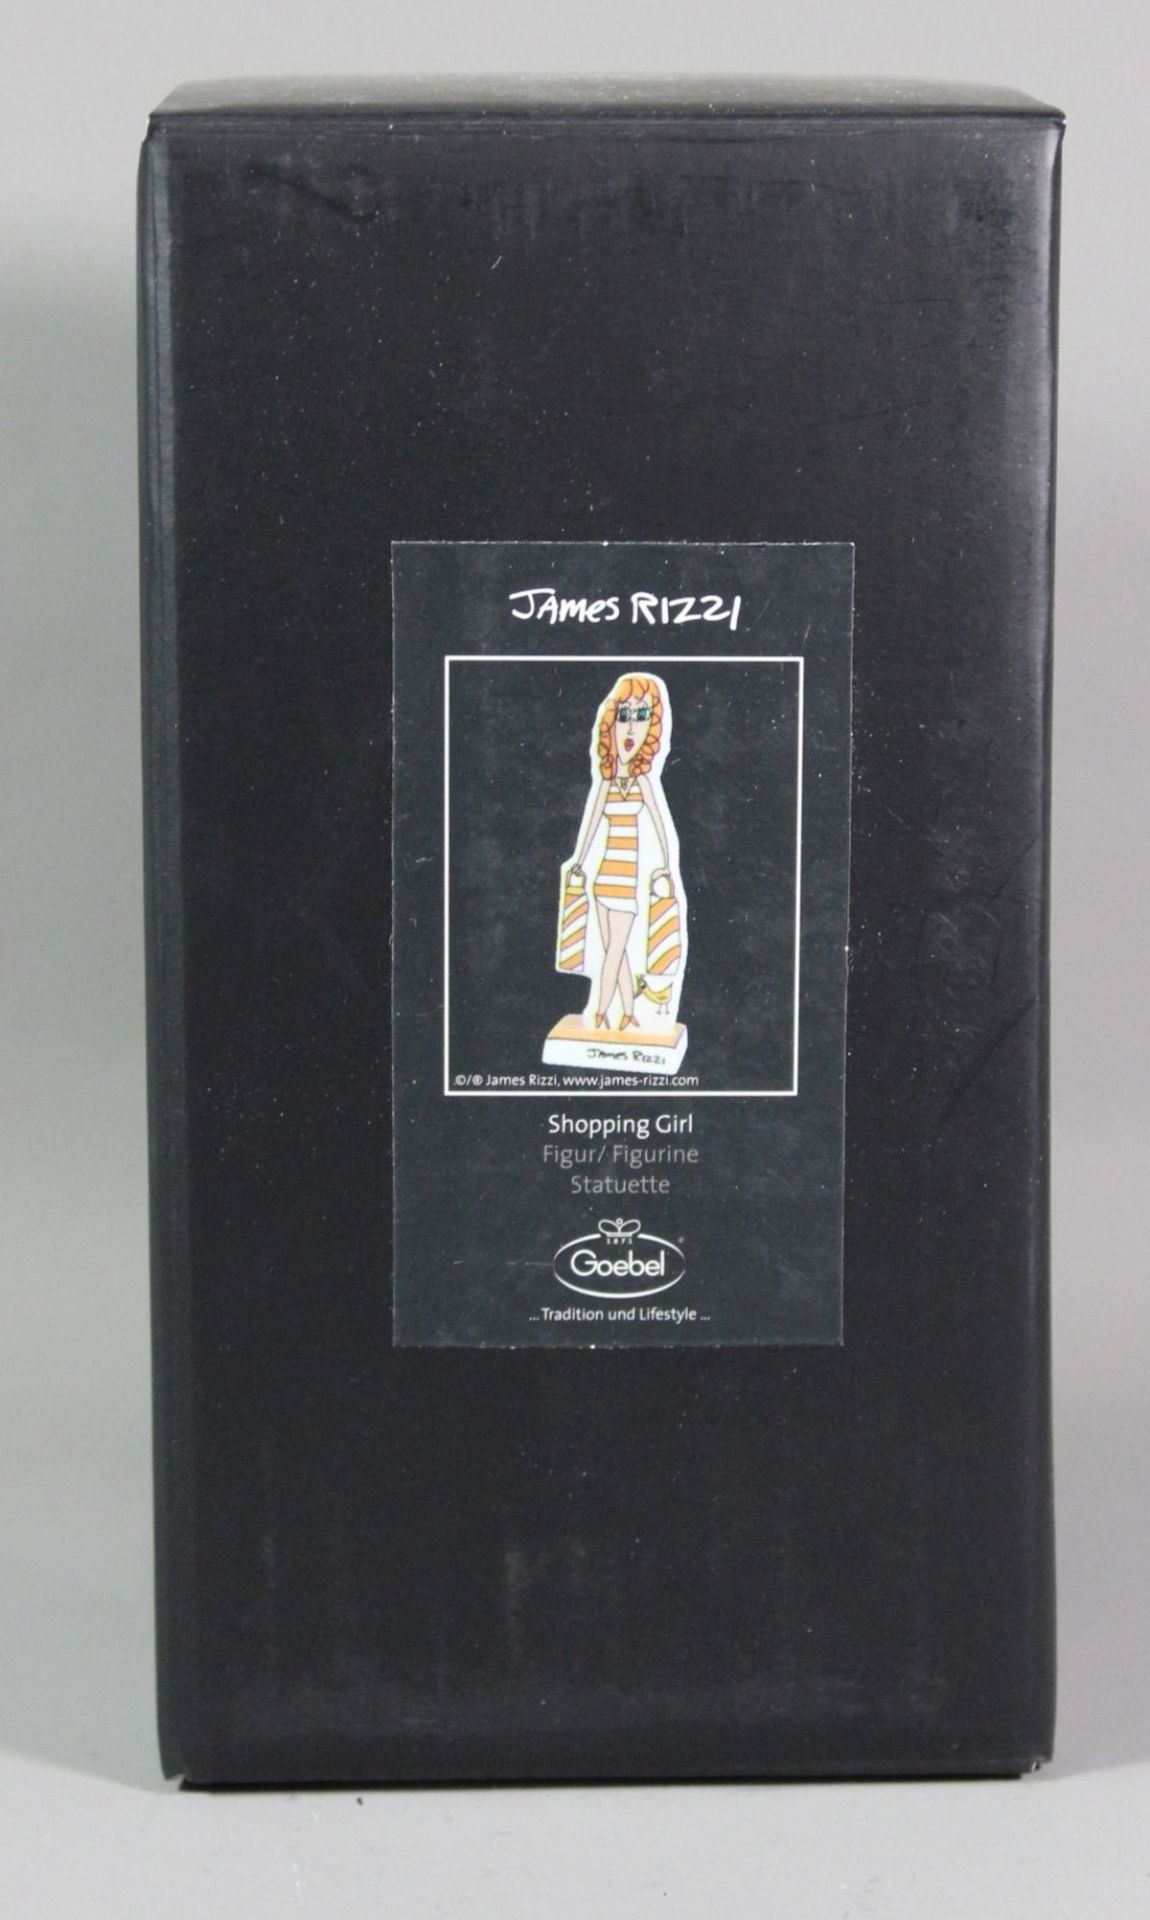 Goebel-Figur "Shopping Girl", Artis Orbis, Entw. James Rizzi, orig. Karton, ca. H-13,5cm. - Image 3 of 3